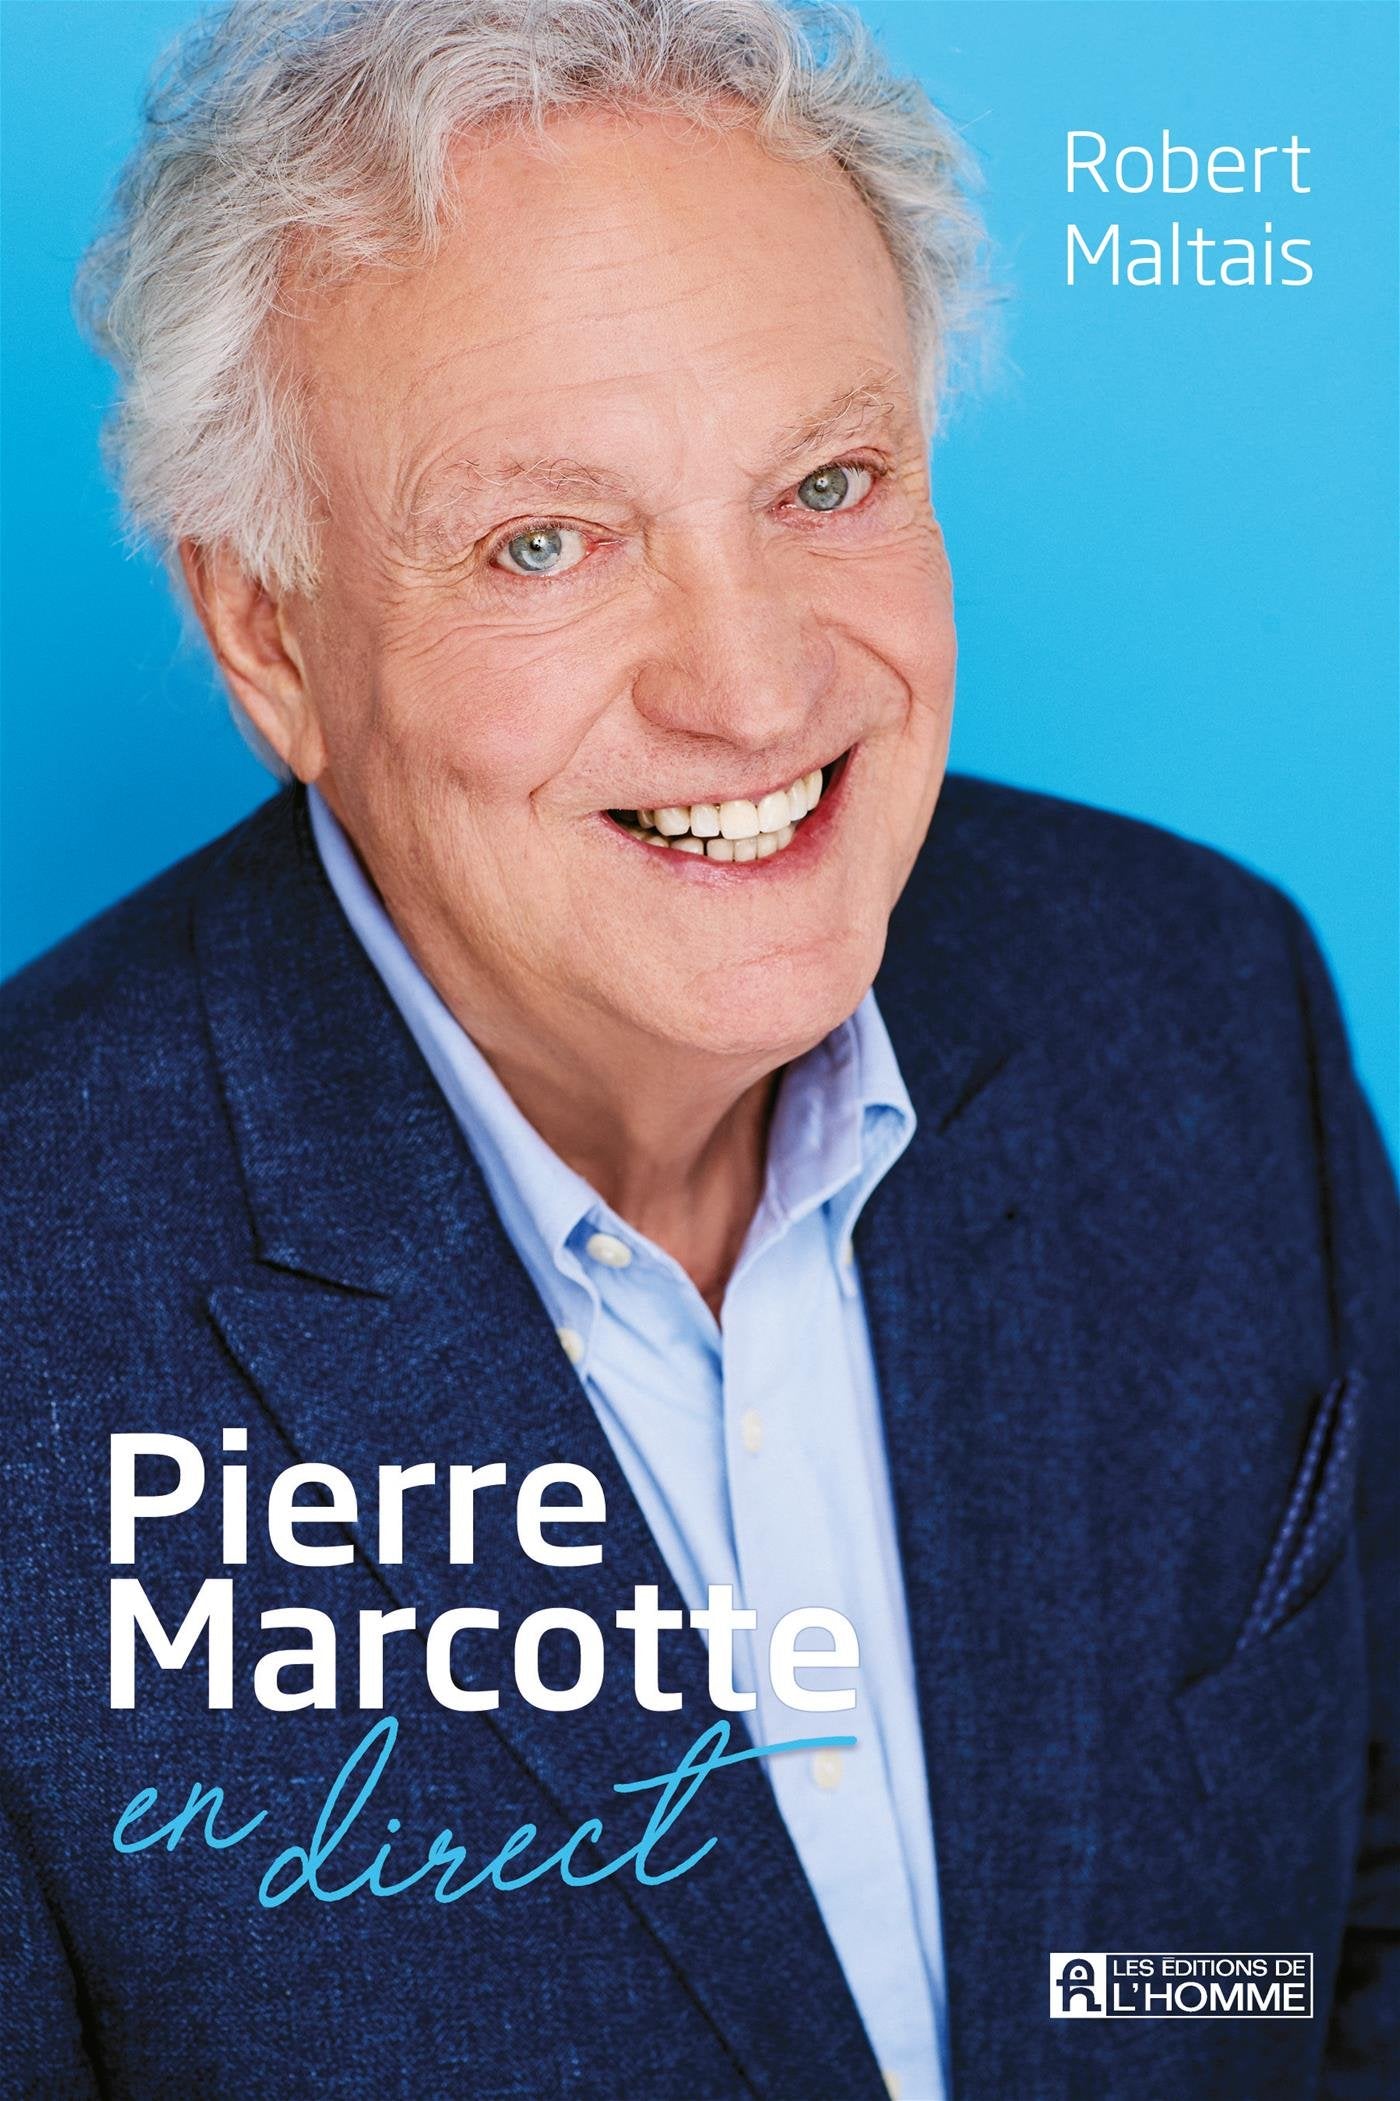 Pierre Marcotte en direct - Robert Maltais